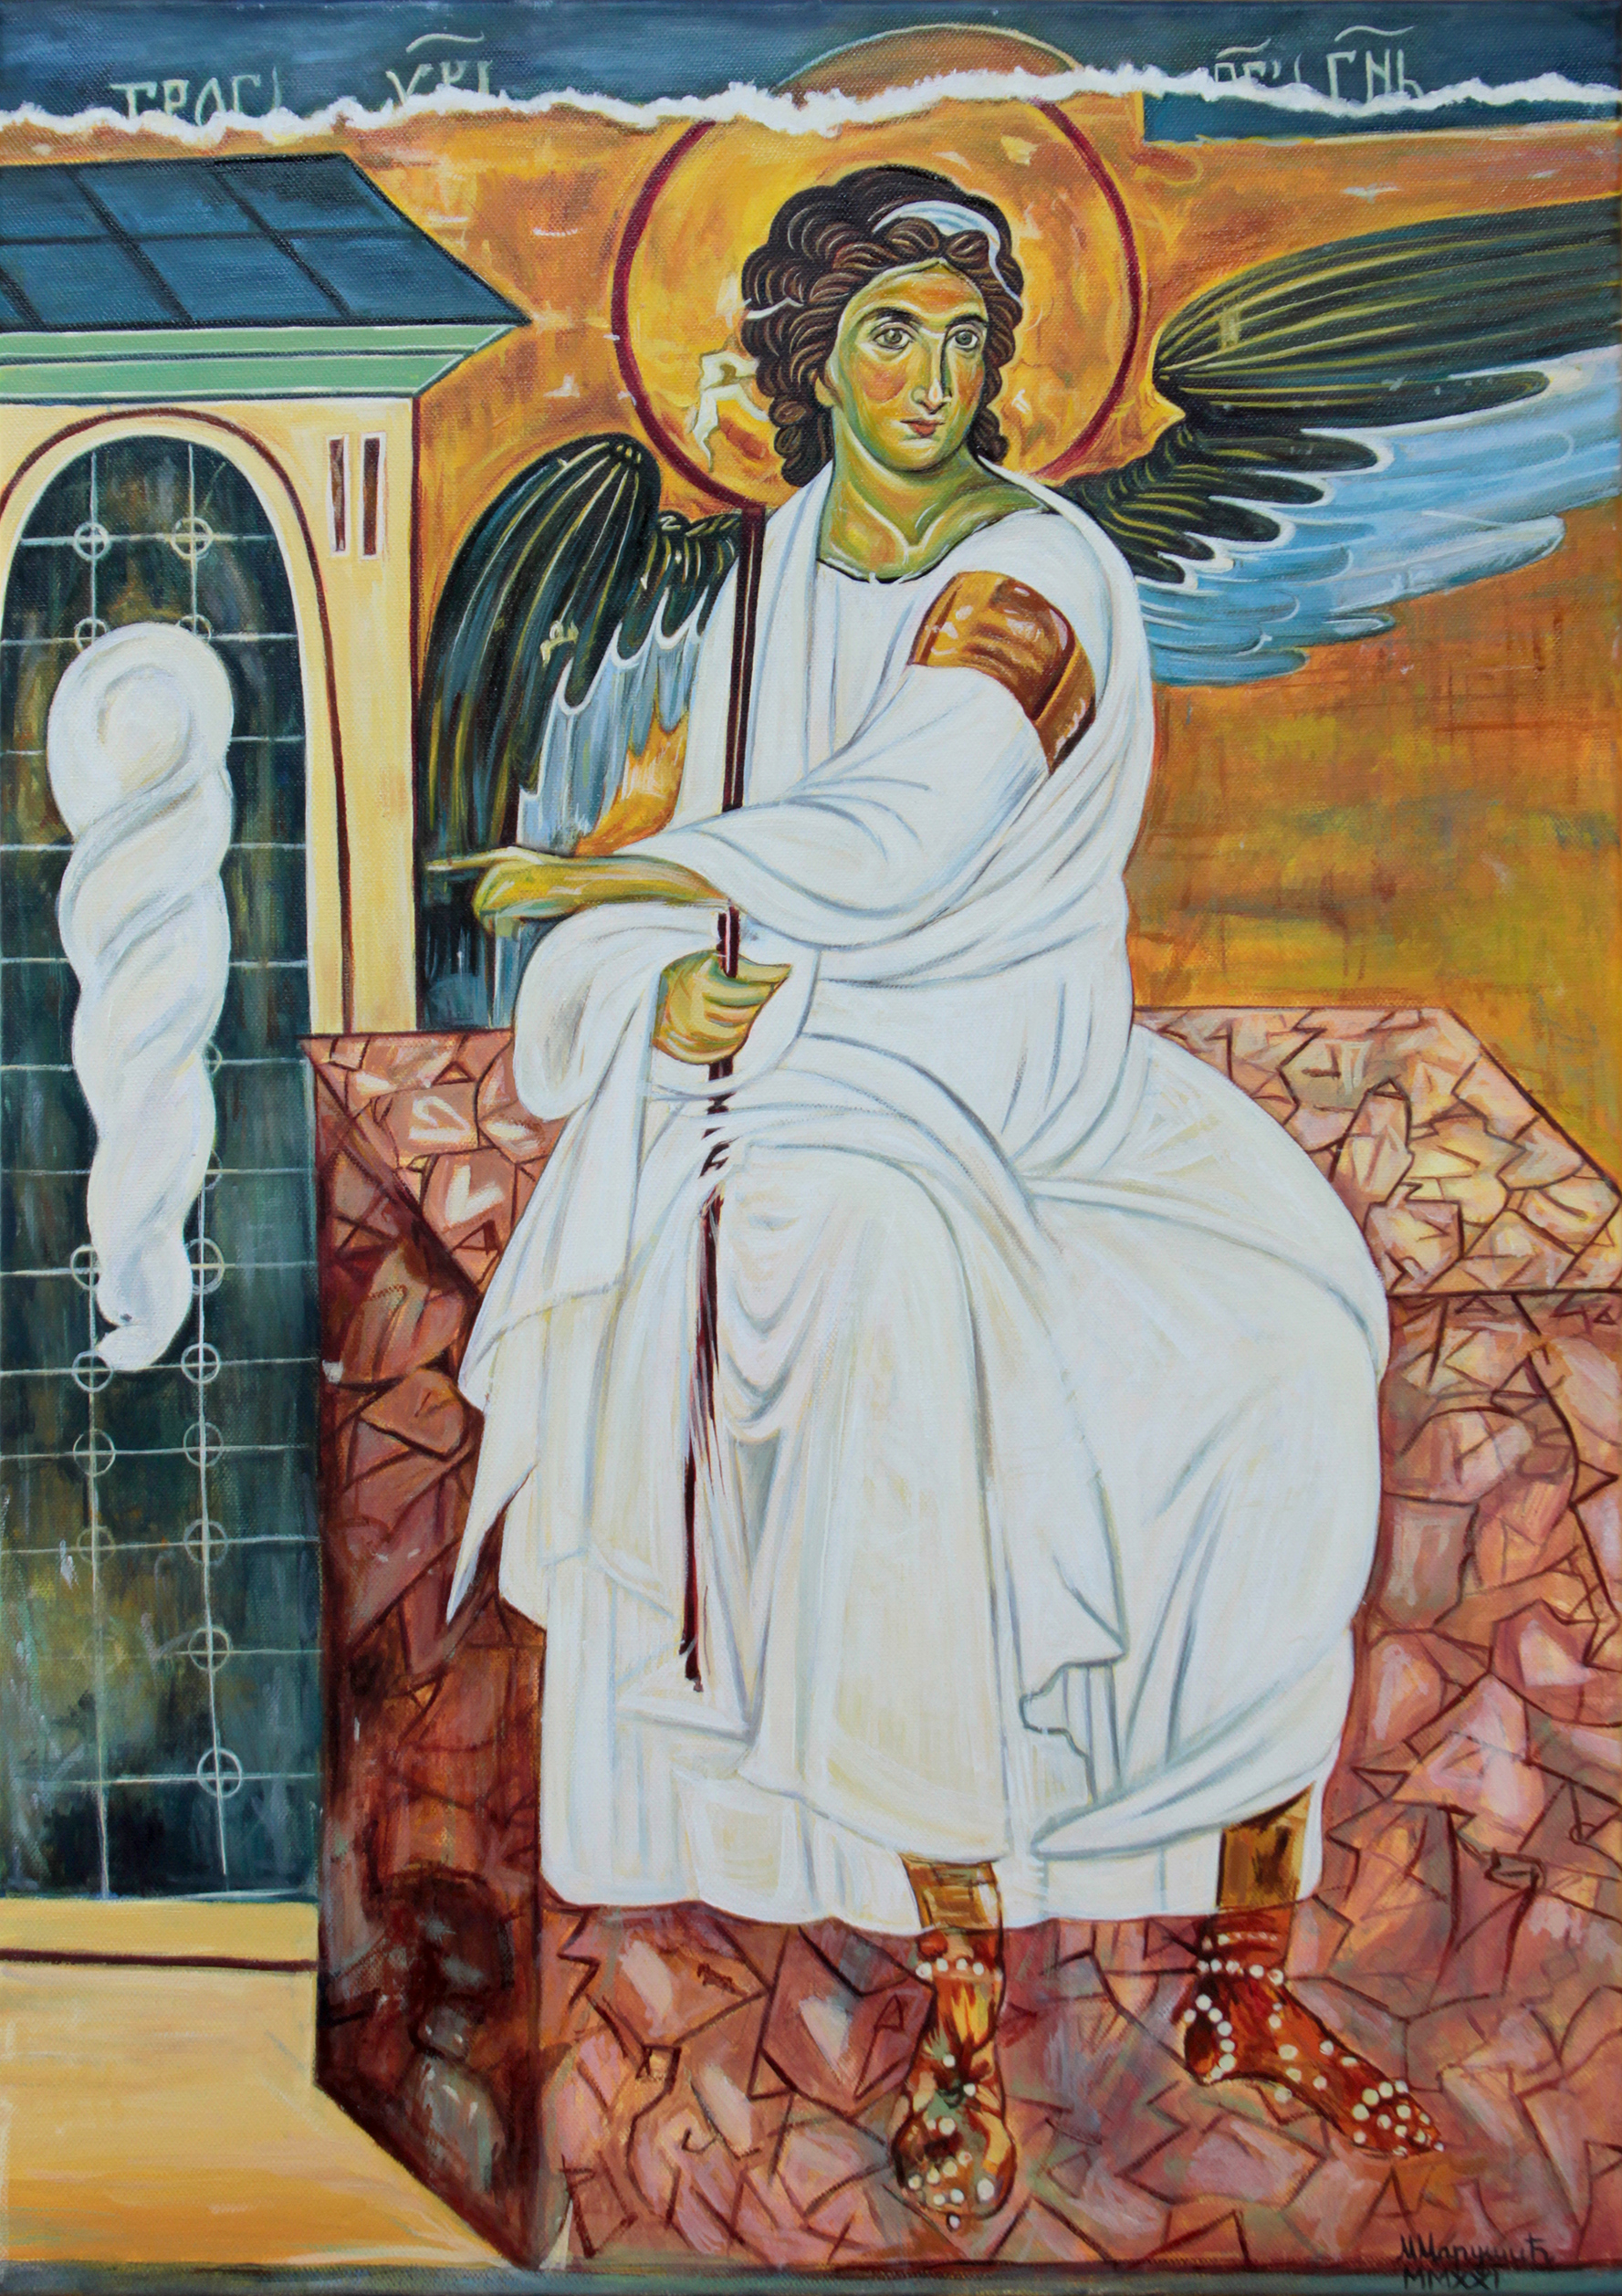 White Angel - 70x50cm - Byzantine Orthodox Icon - Oil on canvas artwork hand painted by artist Milica MARUŠIĆ